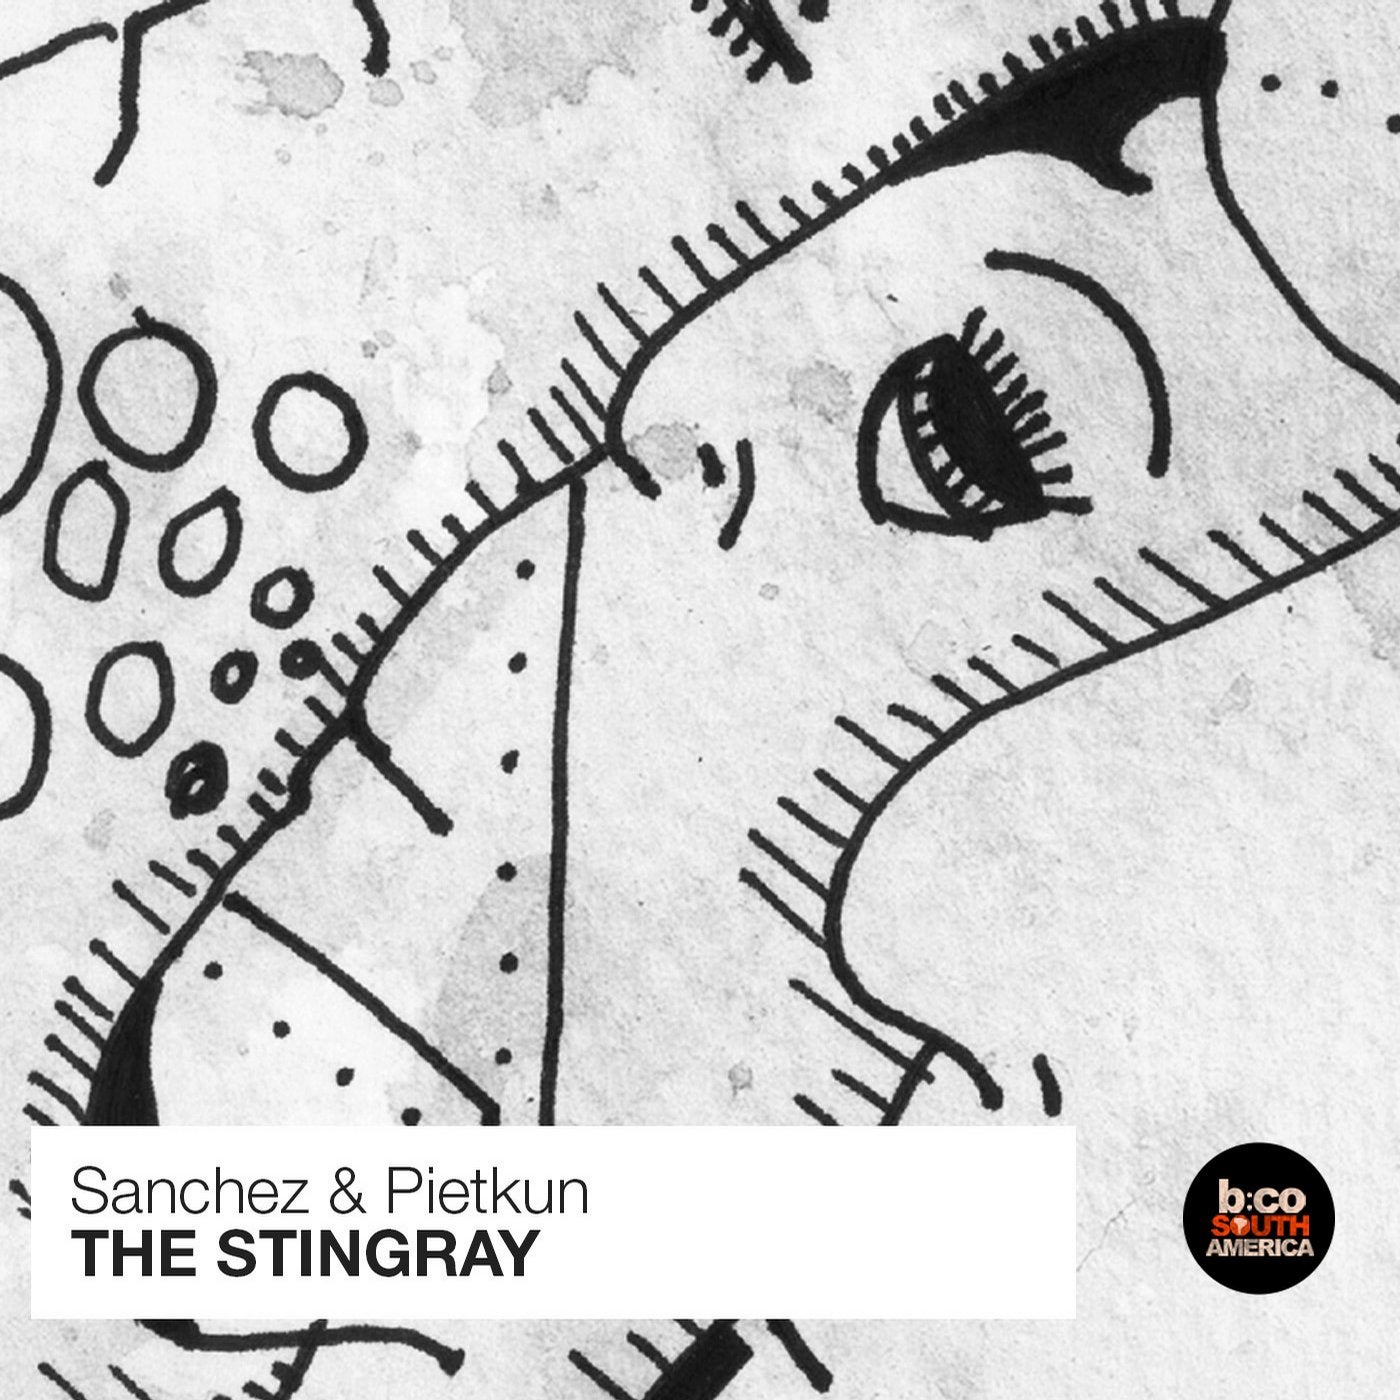 The Stingray